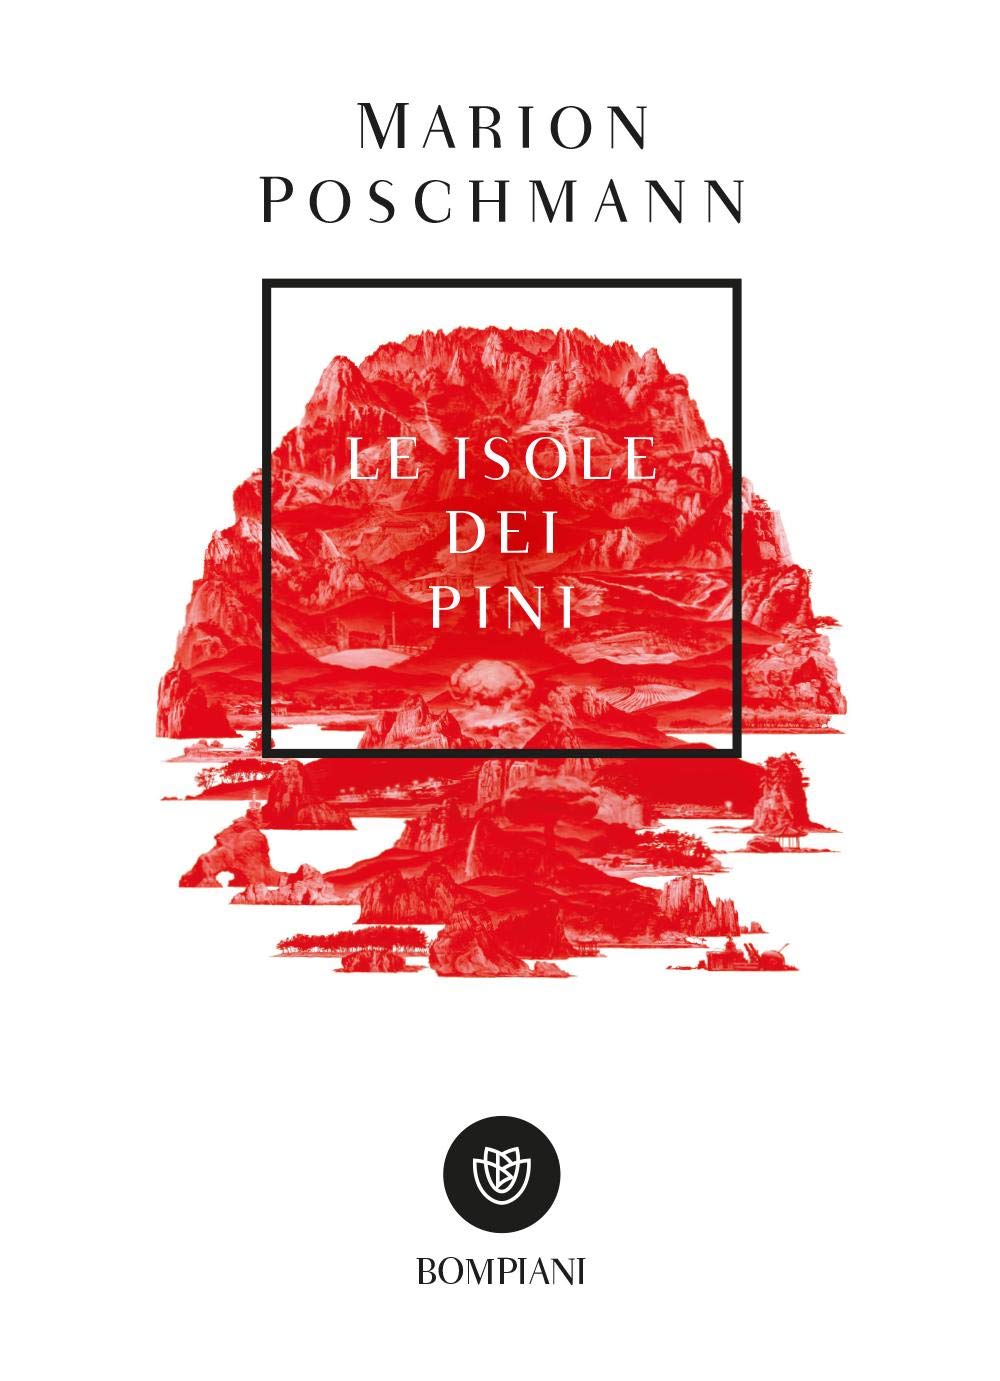 Marion Poschmann nella shortlist del Man Booker Prize